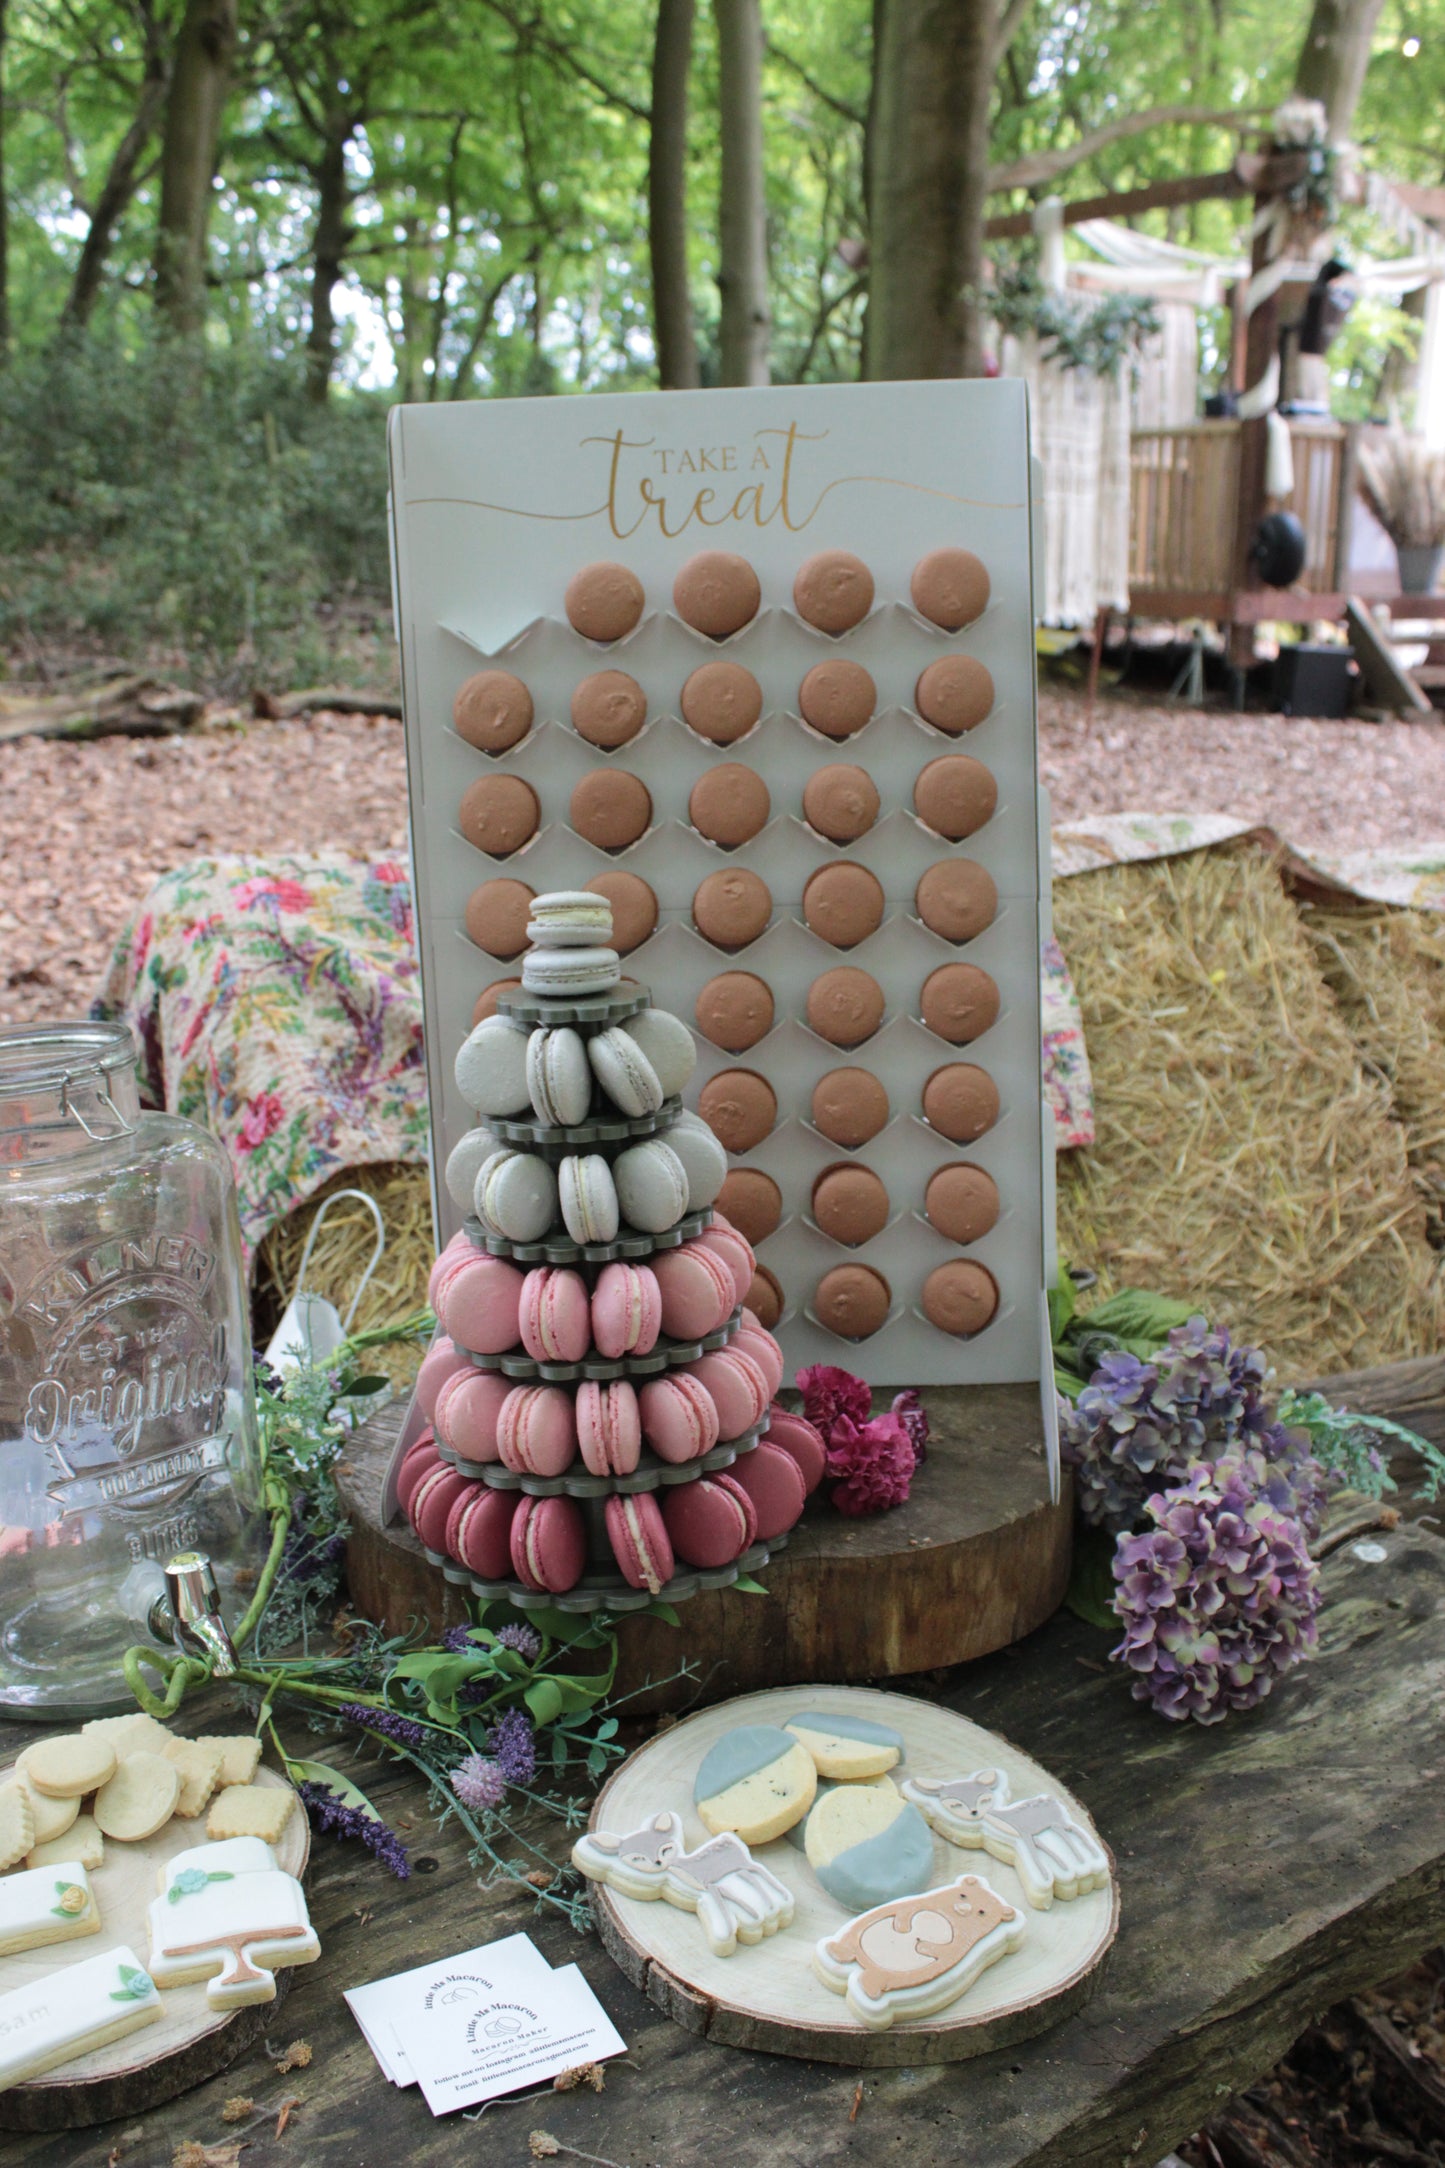 Wedding 'Take a Treat' Macaron stand